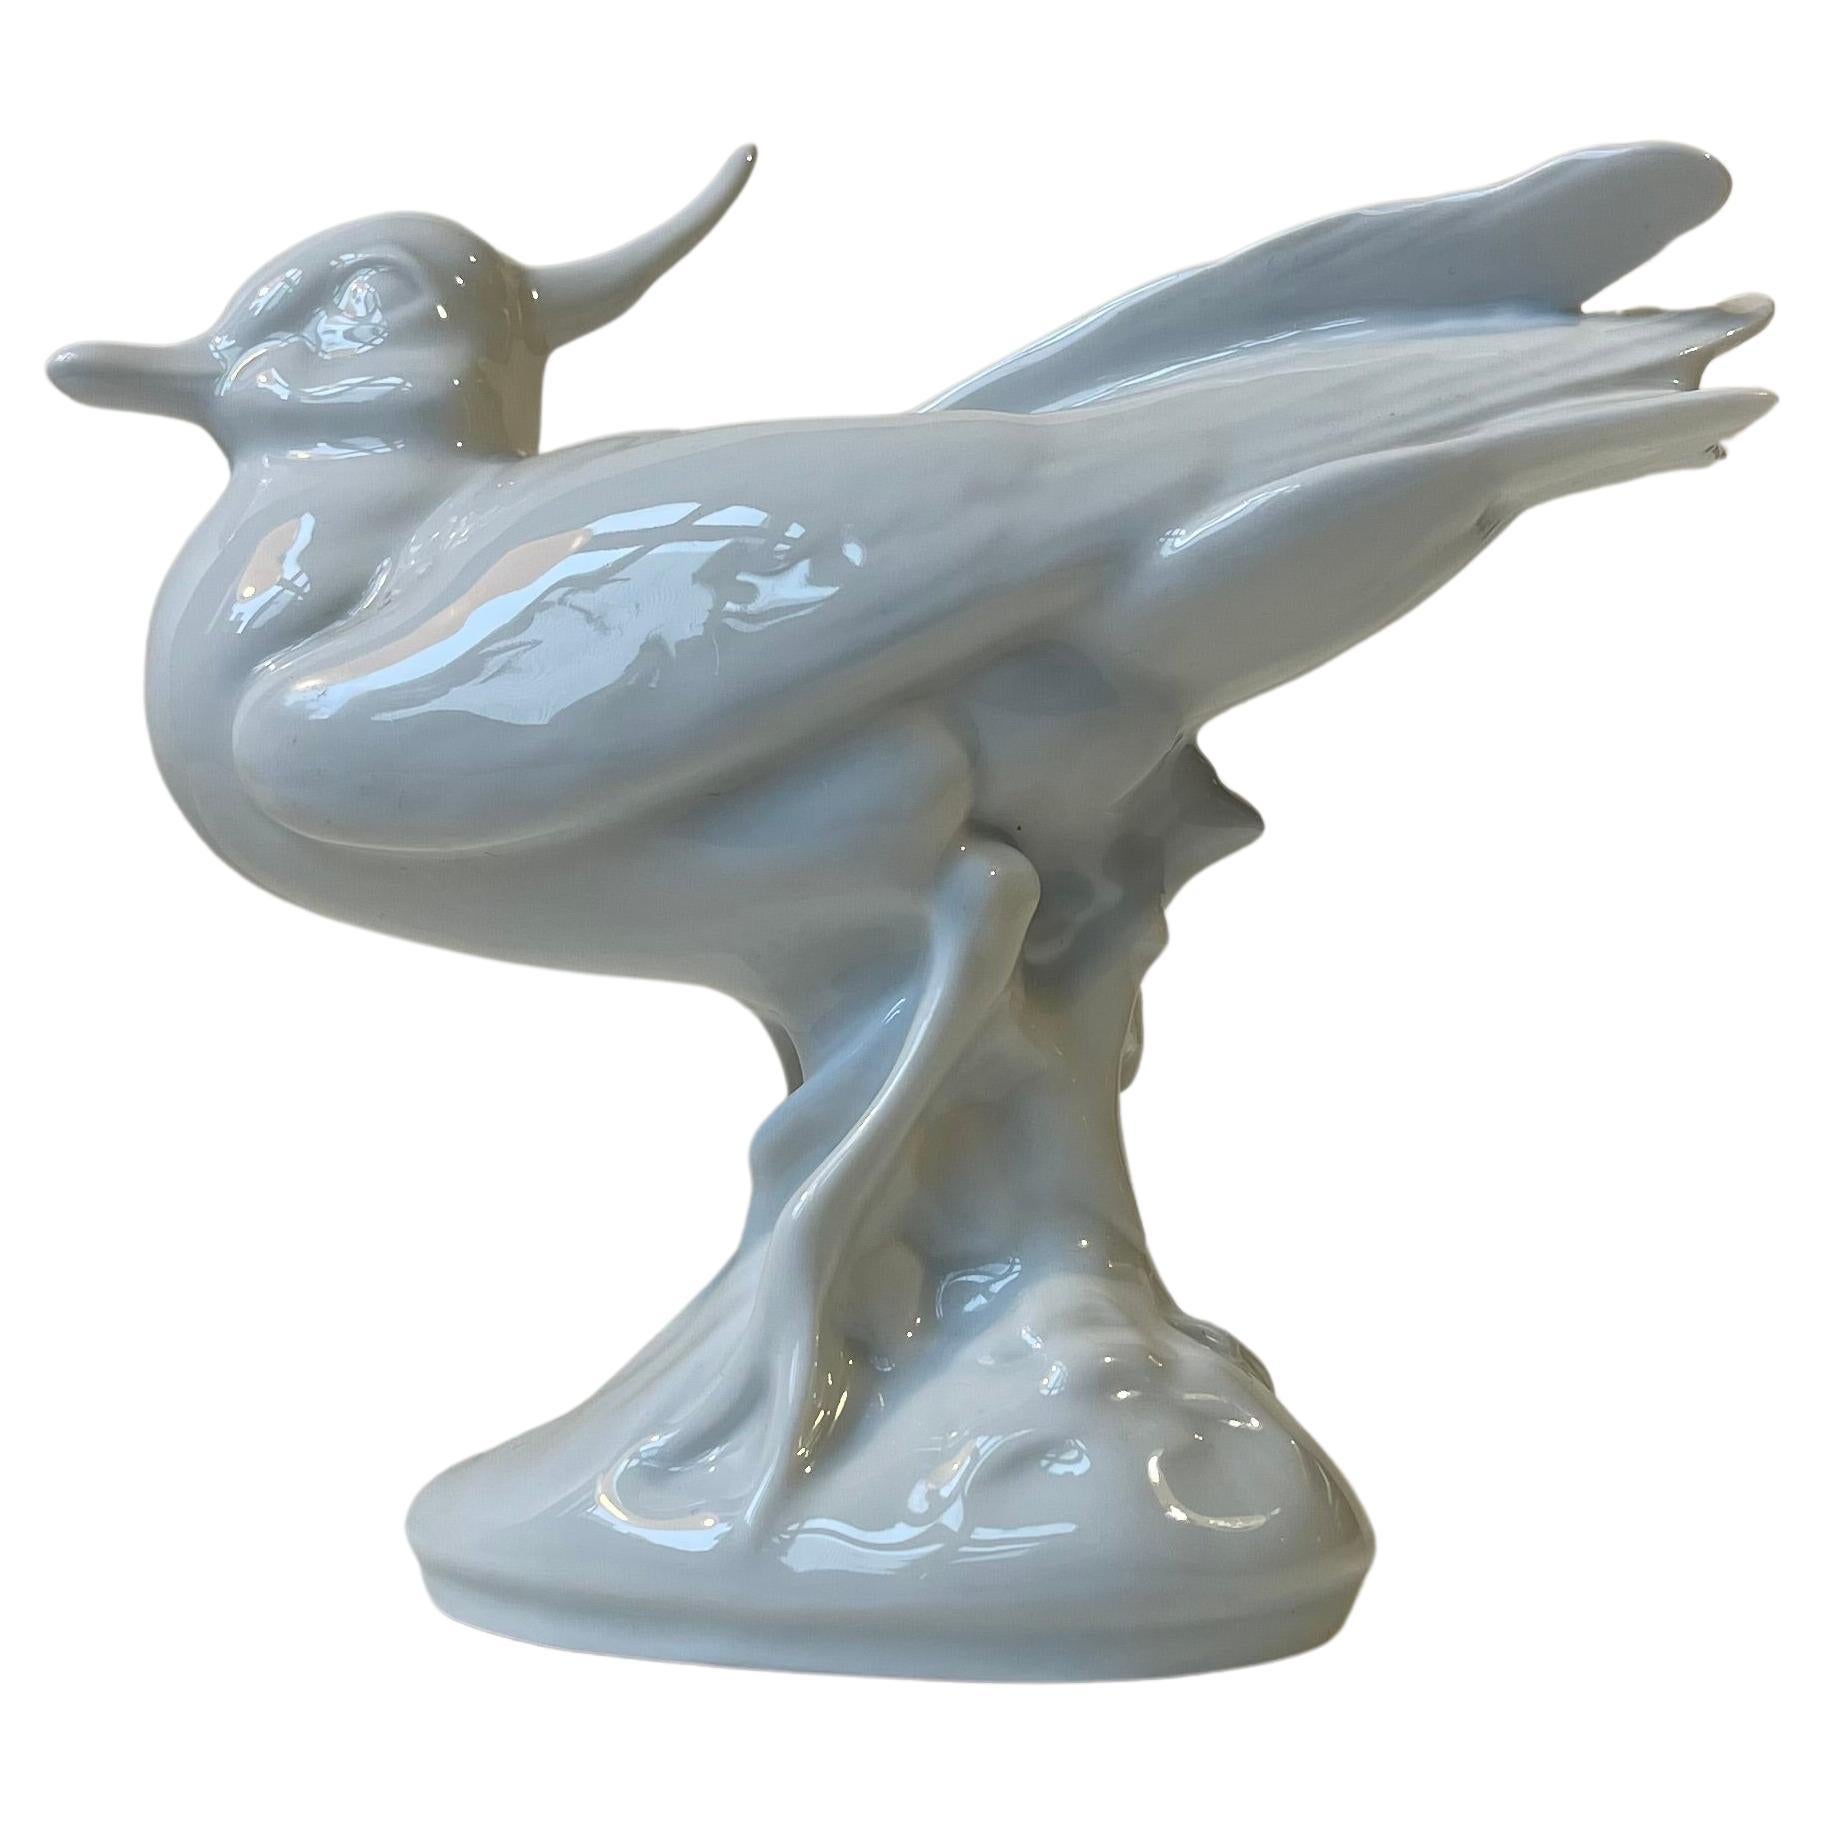 Royal Copenhagen White Peace Bird Figurine in Glazed Porcelain